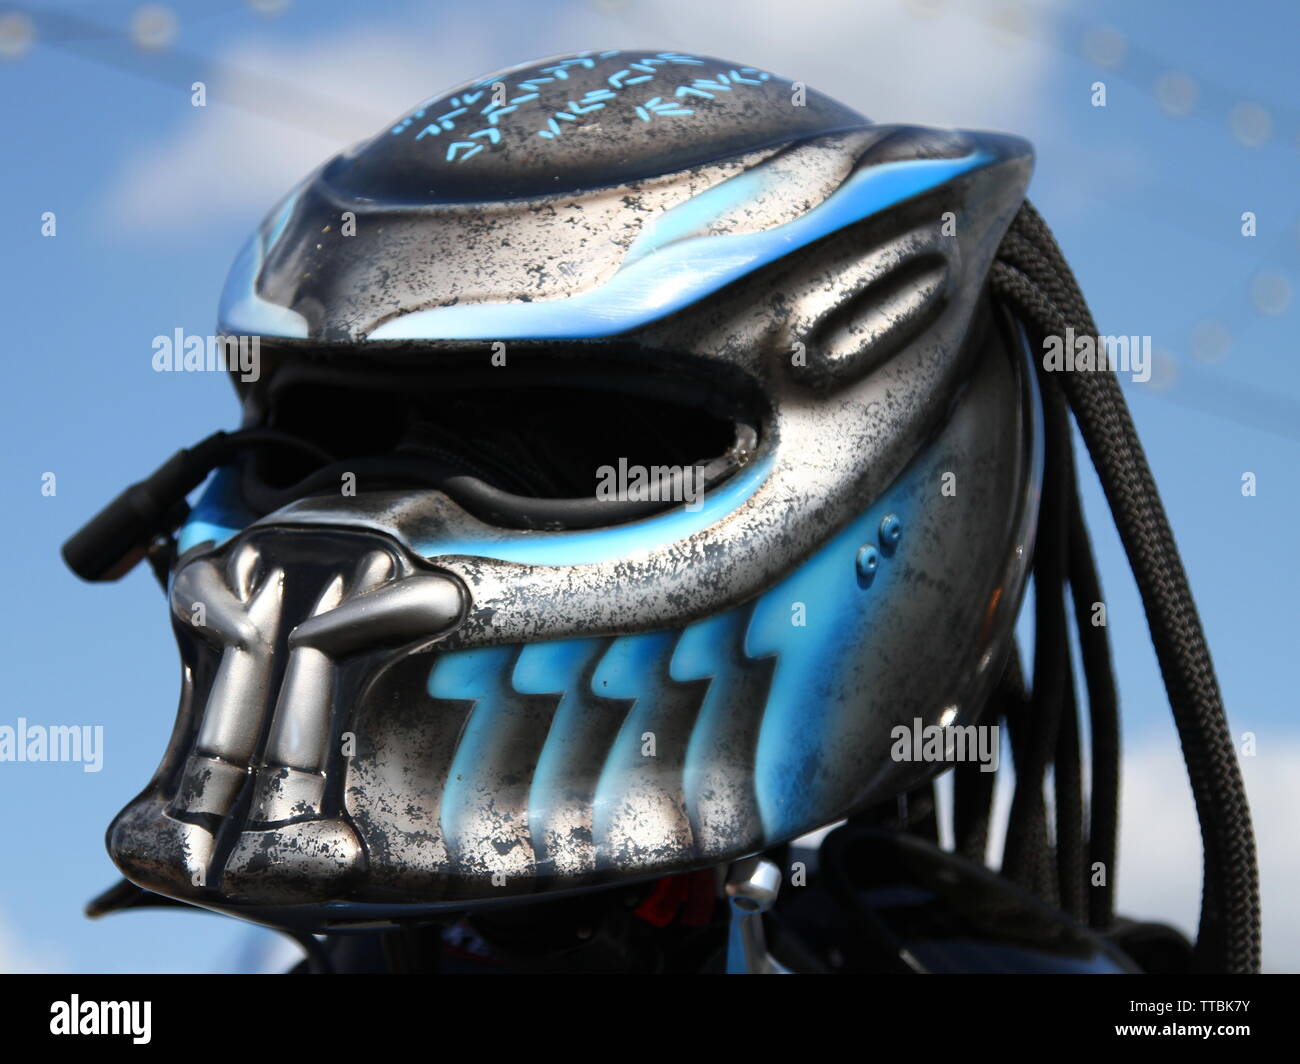 Paignton, Devon, England: A close up of a Predator style motorbike helmet Stock Photo